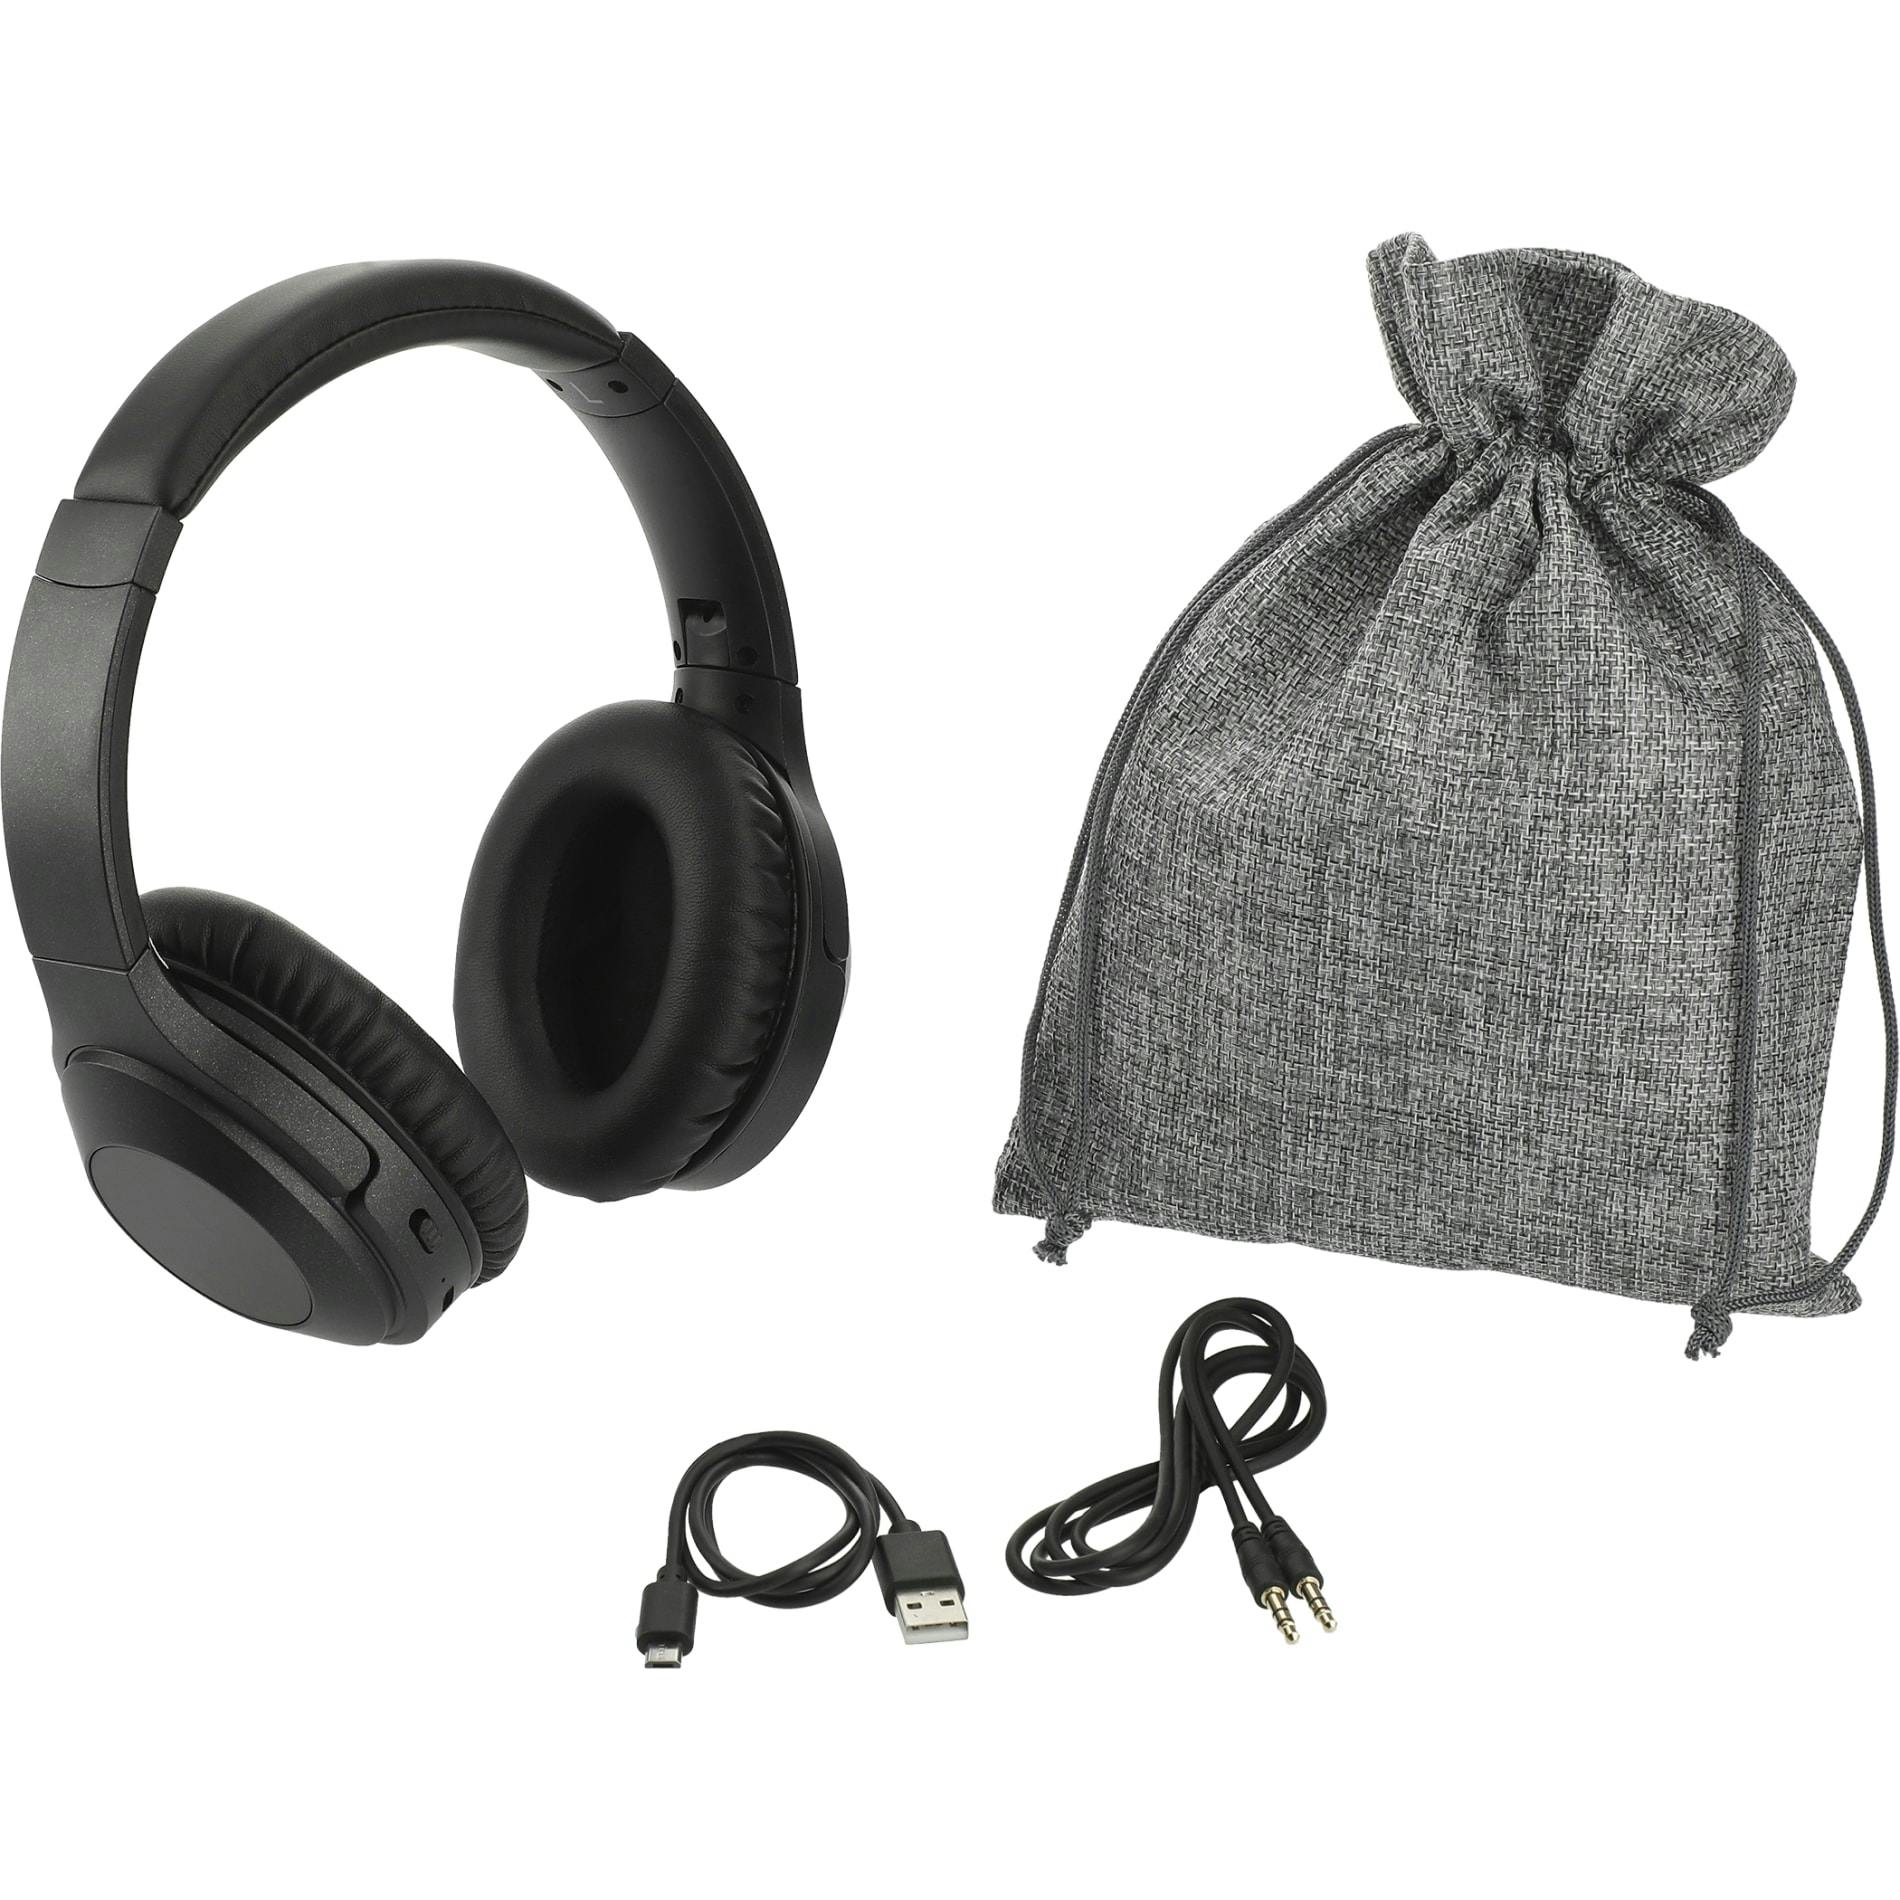 Hush Active Noise Cancellation Bluetooth Headphone - additional Image 3